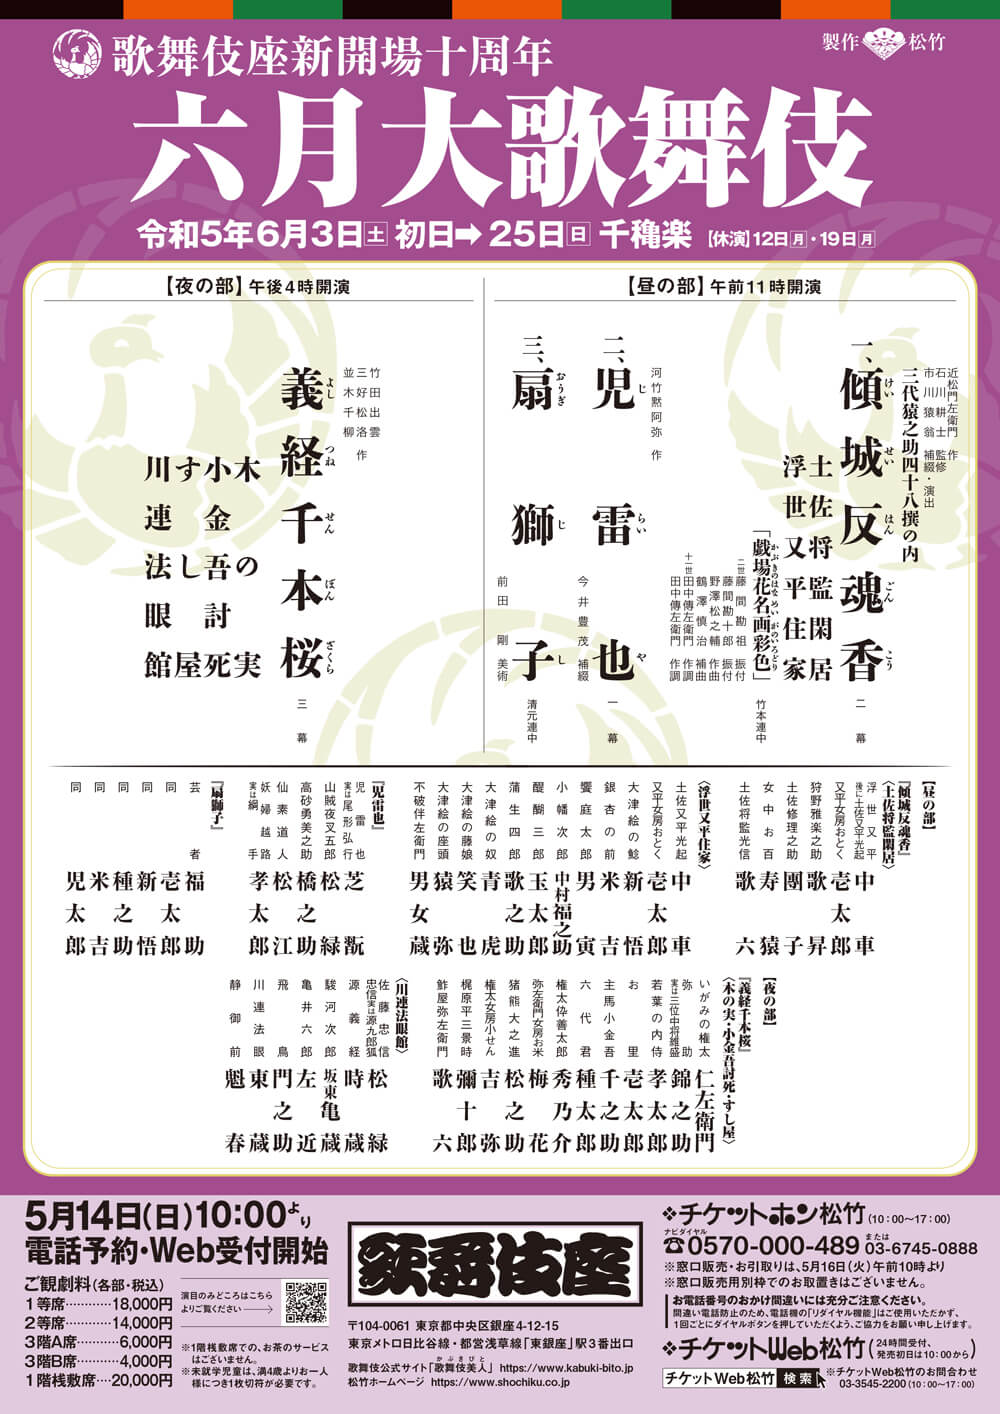 June Program at the Kabukiza Theatre